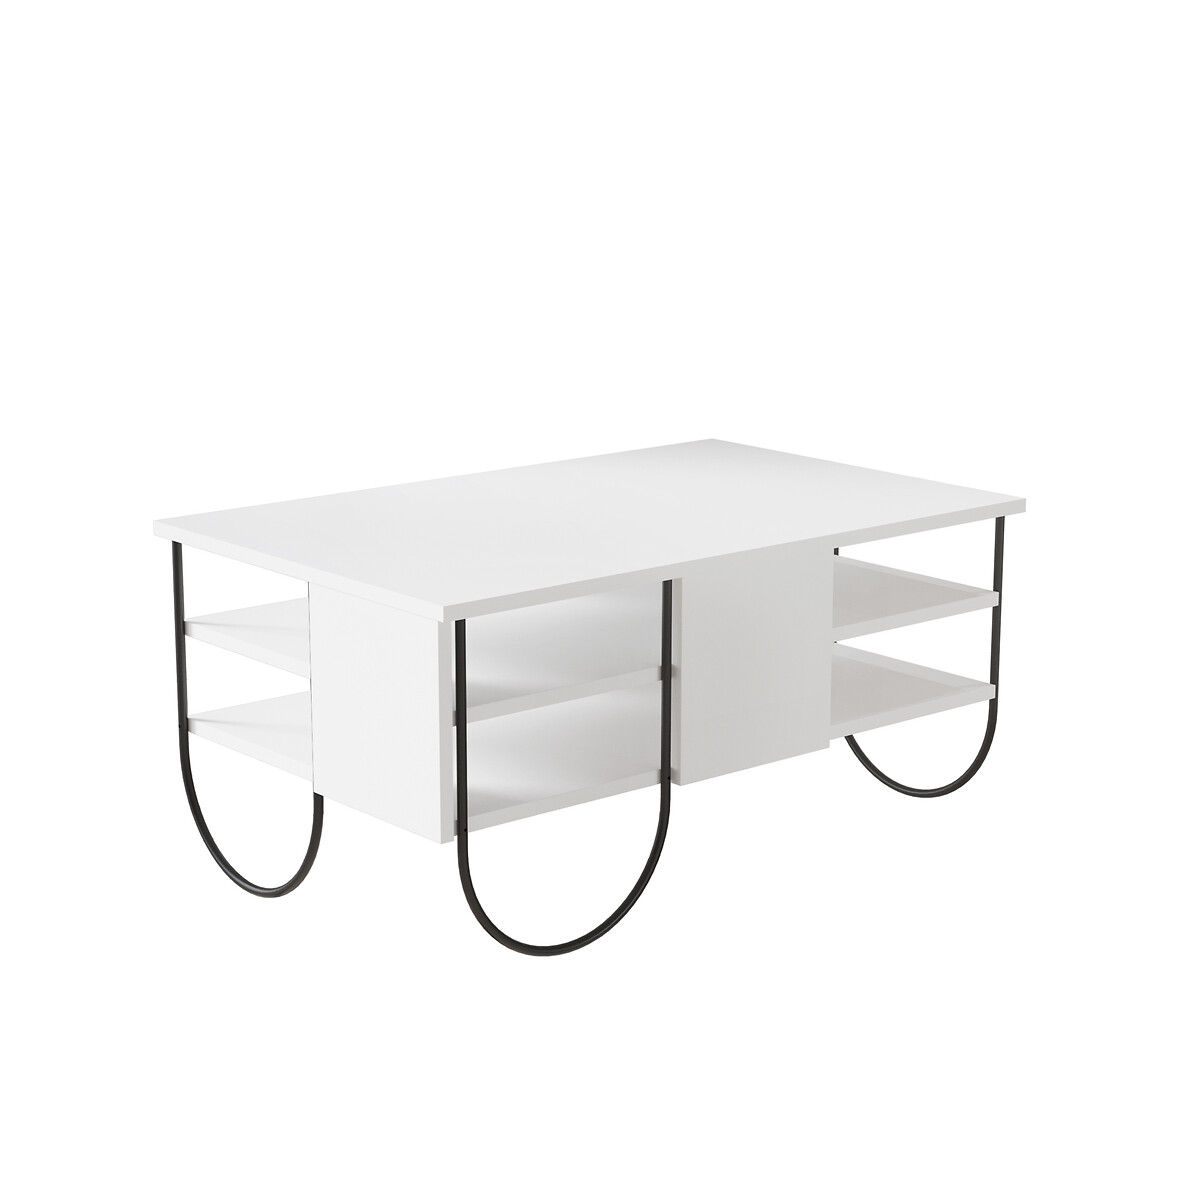 Журнальный стол NORFOLK COFFEE TABLE единый размер белый стол журнальный diamond coffee table единый размер серый